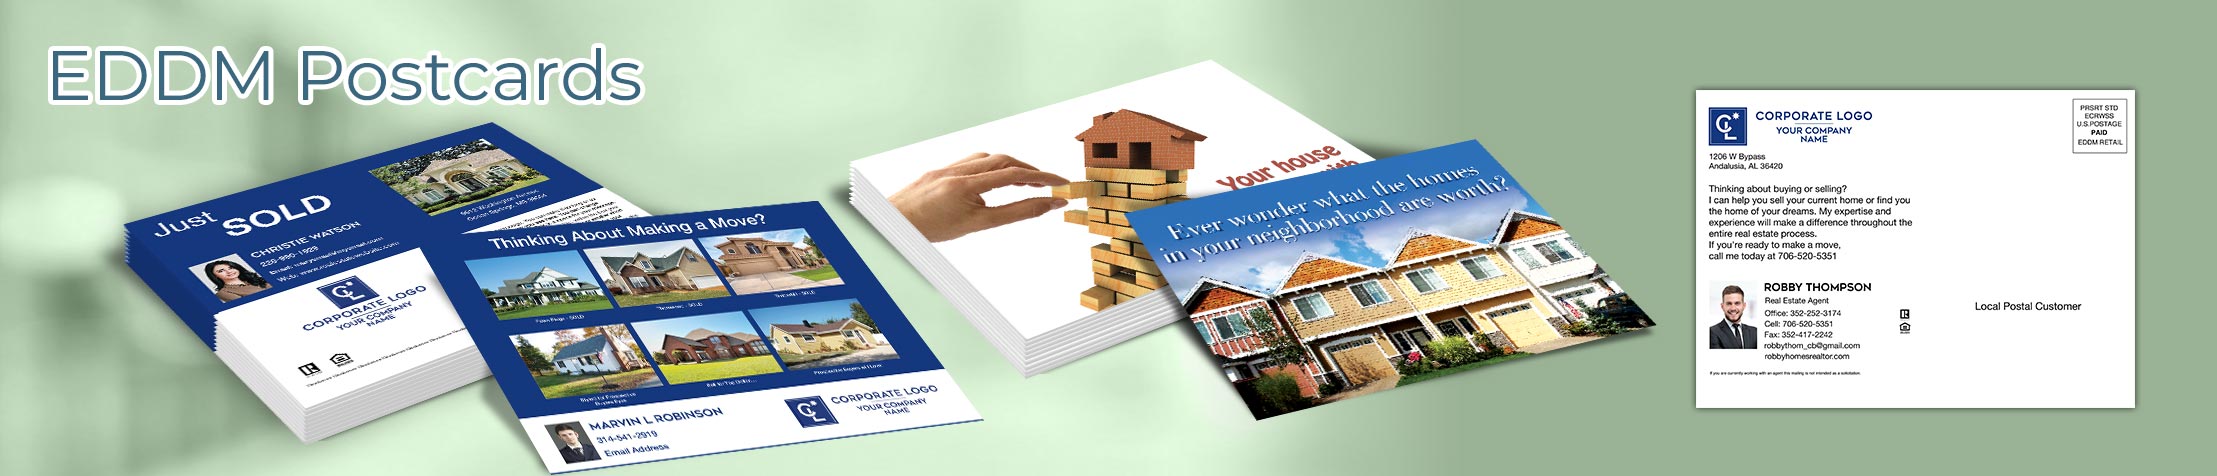 Coldwell Banker Real Estate EDDM Postcards - personalized Every Door Direct Mail Postcards | BestPrintBuy.com